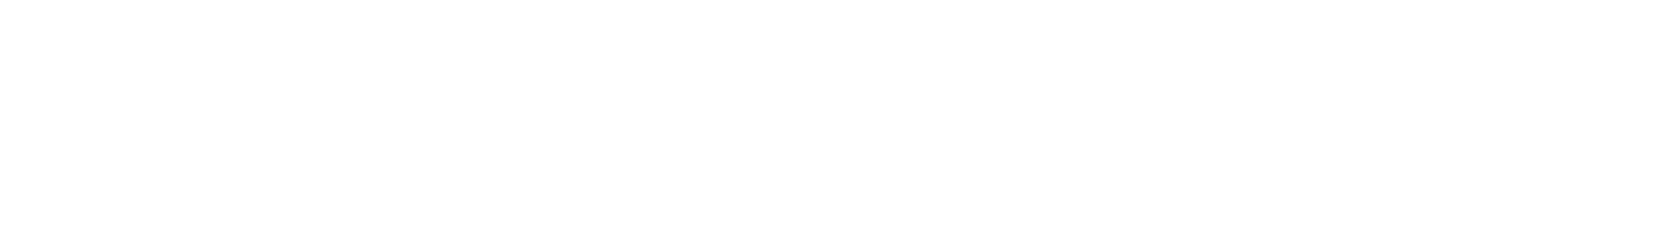 Career Concepts logo (white)